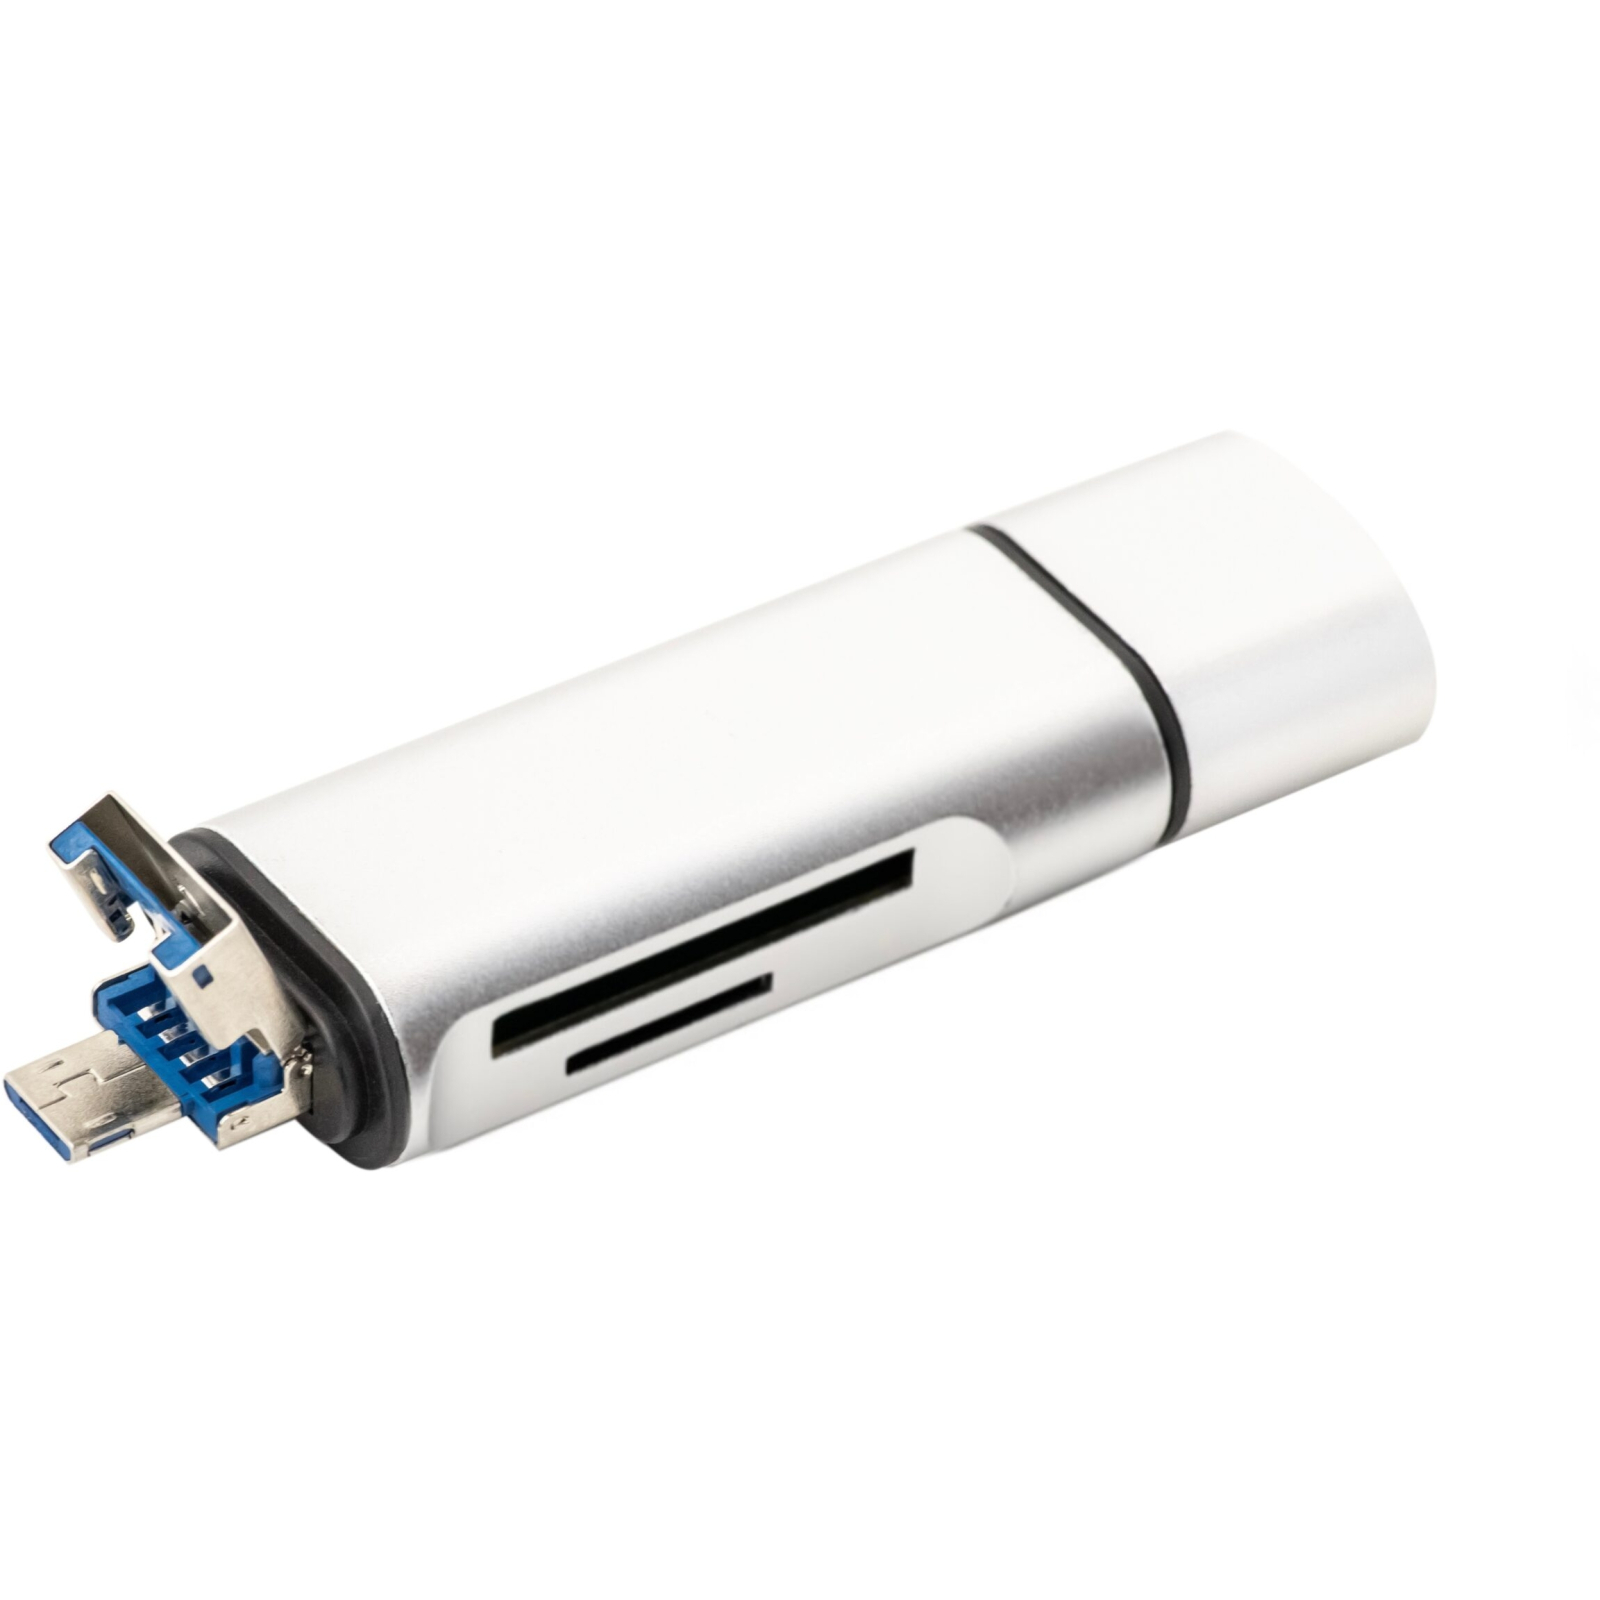 Концентратор XoKo AC-440 Type-C USB 3.0 and MicroUSB/SD Card Reader (XK-AС-440) изображение 4